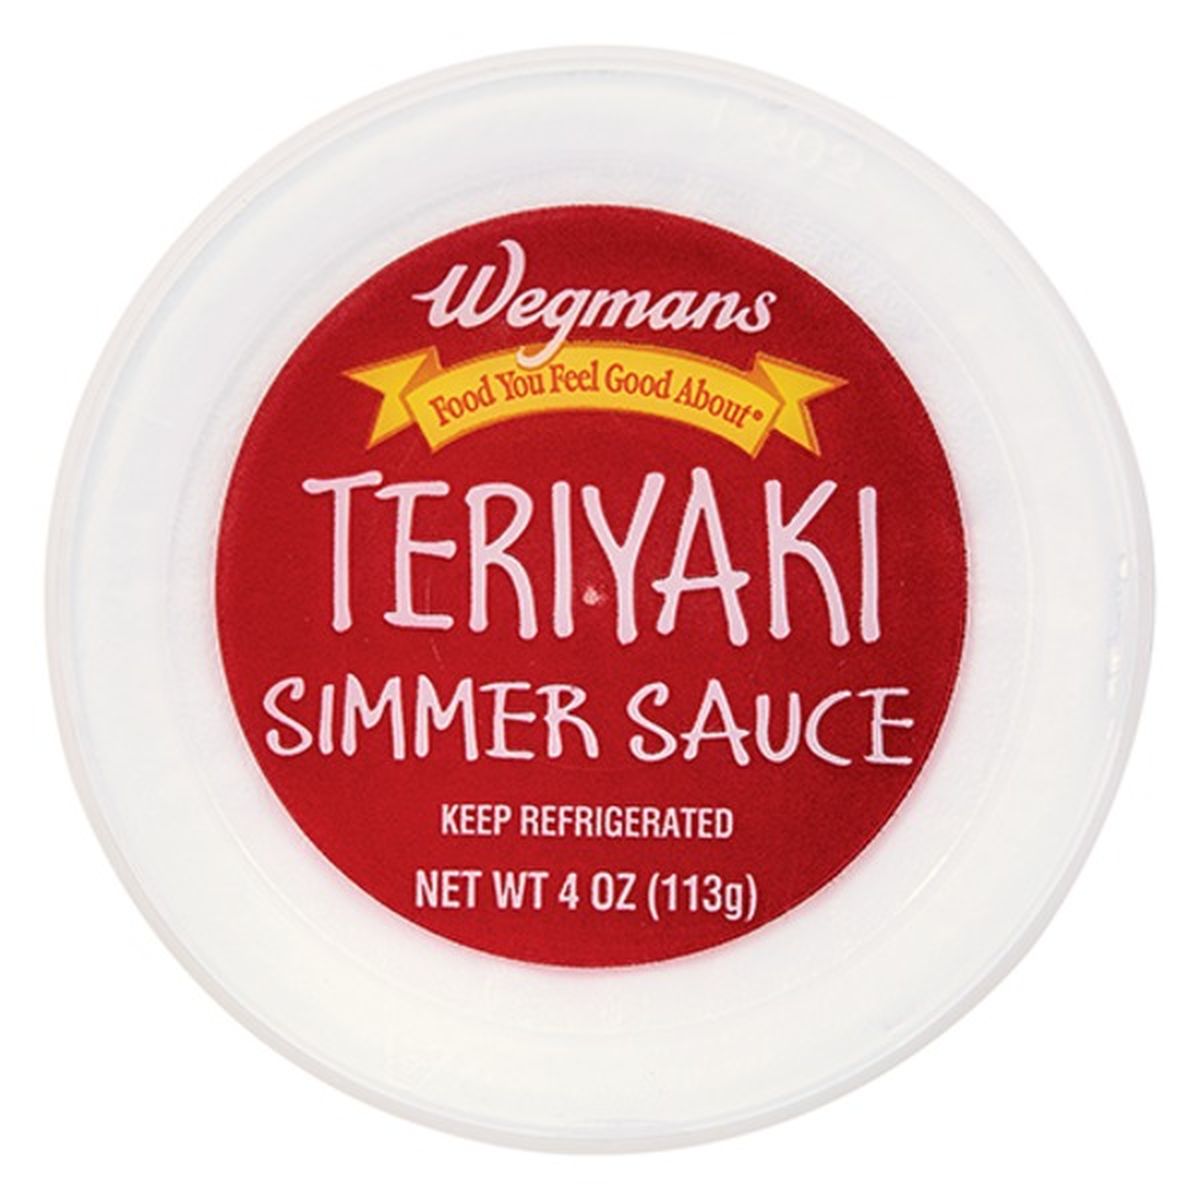 Calories in Wegmans Teriyaki Simmer Sauce